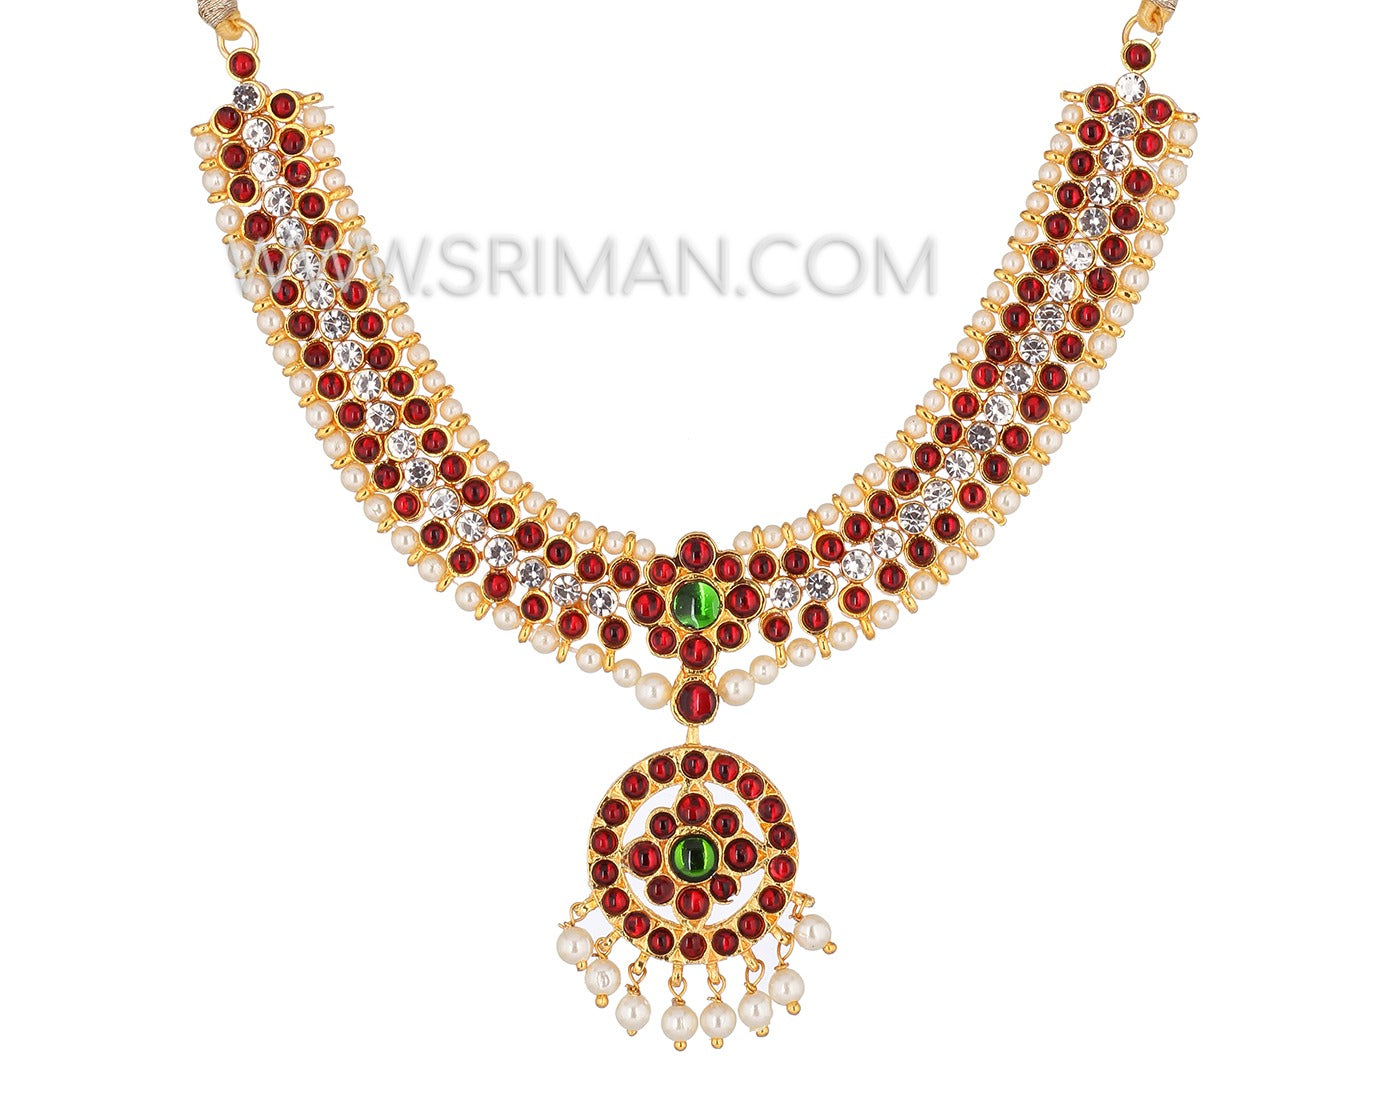 Sriman kempu necklace for bharatanatyam